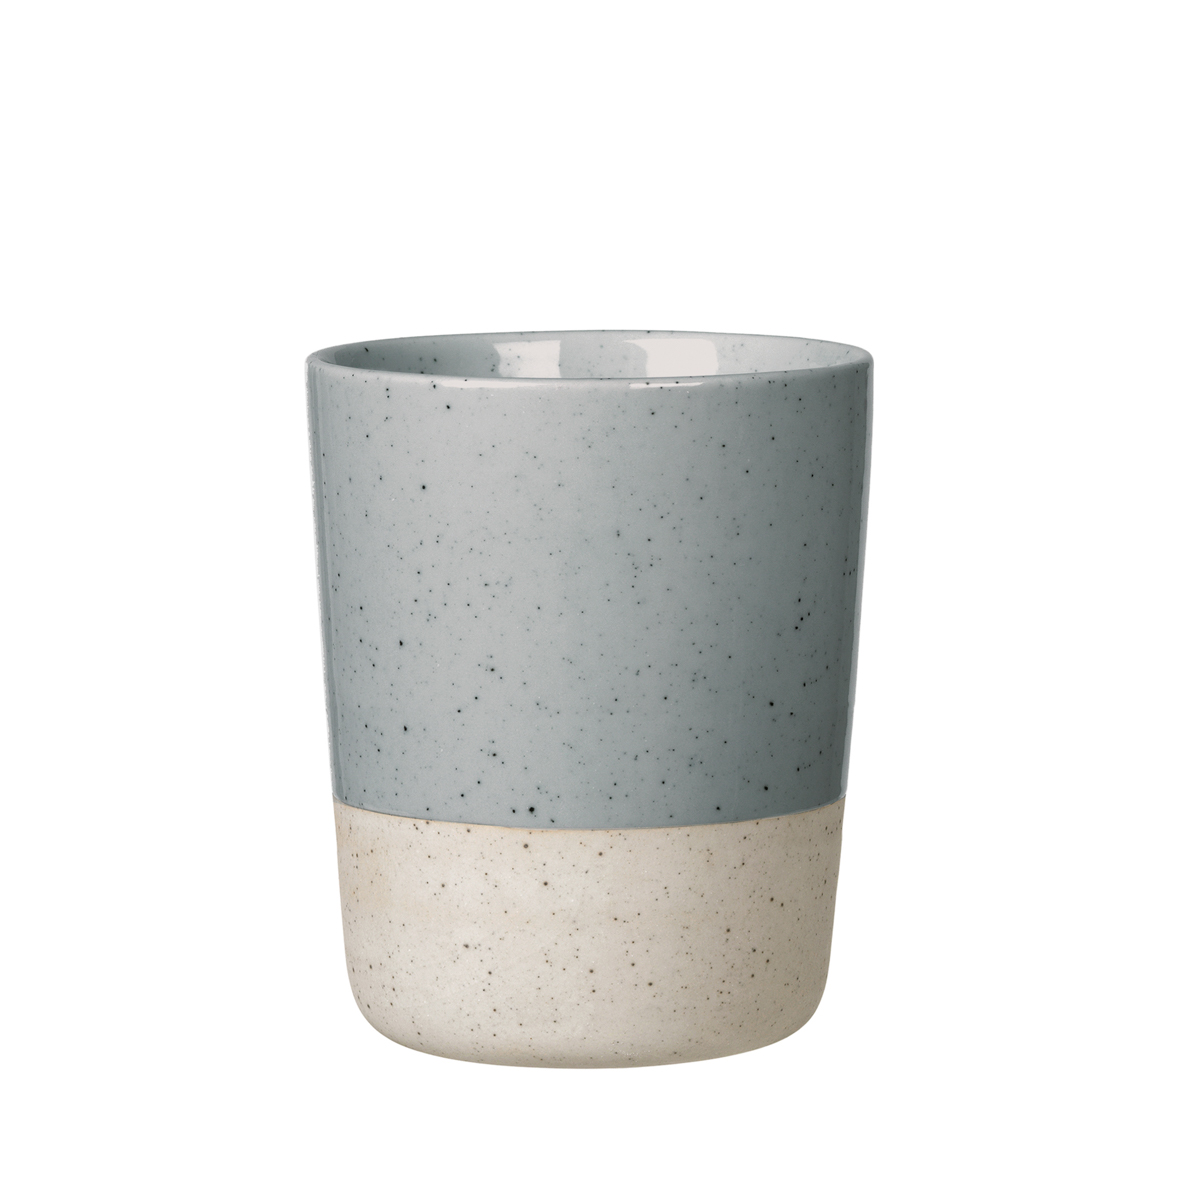 Set 2 Thermobecher -SABLO- Stone 260 ml, Ø 8,5 cm. Material: Keramik. Von Blomus.